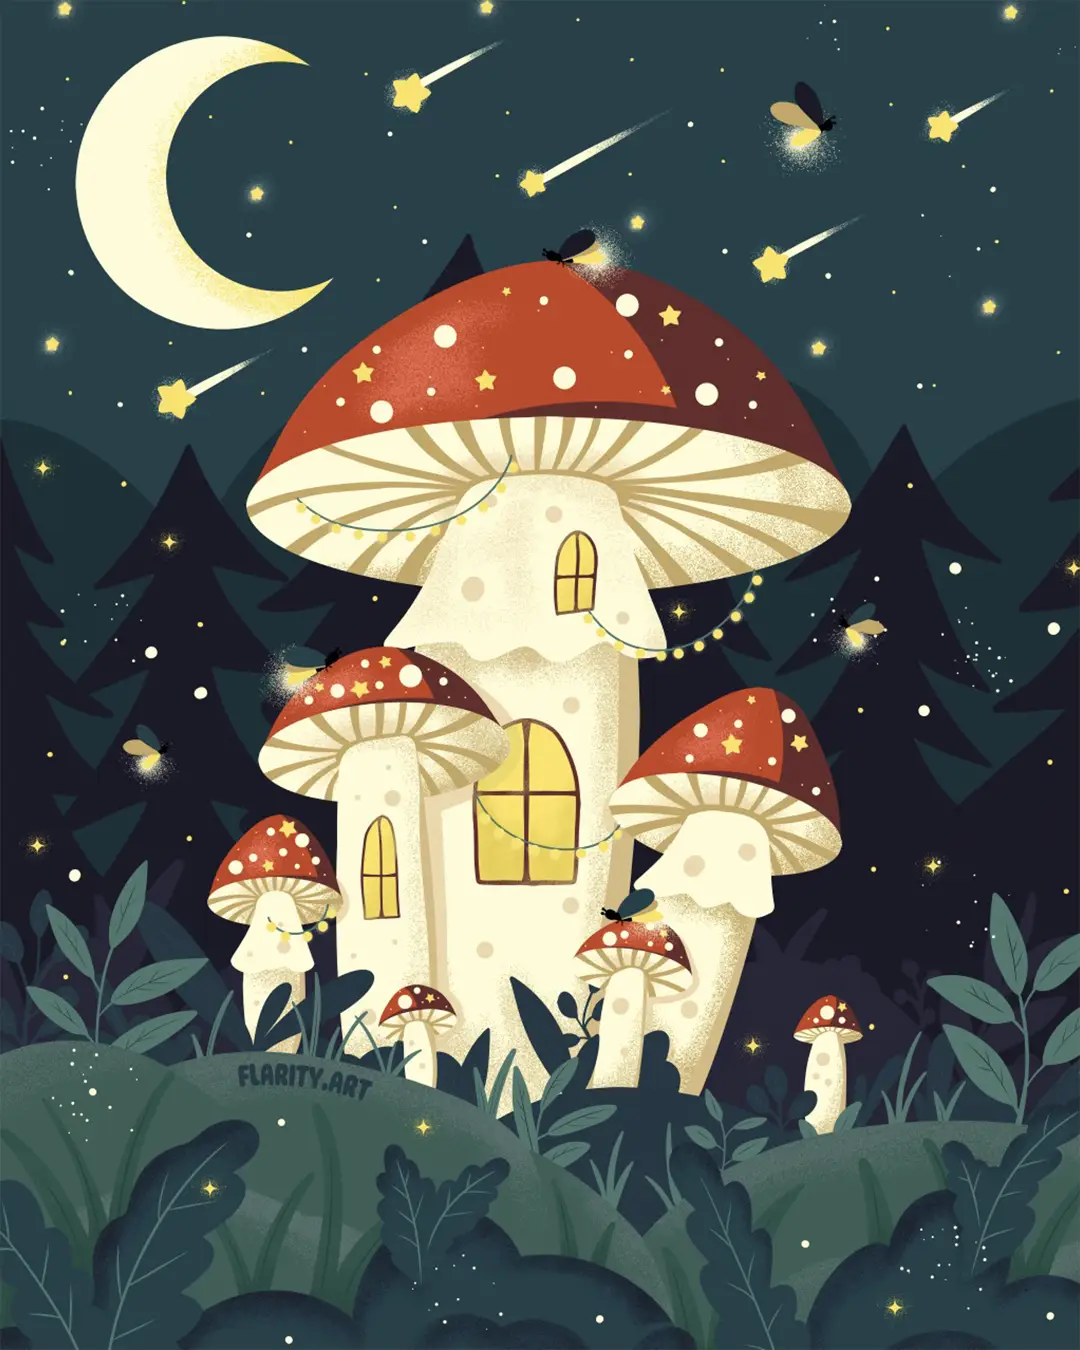 Sweet Spring Instagram Art Challenge - Fantastic Fungi - flarity.art